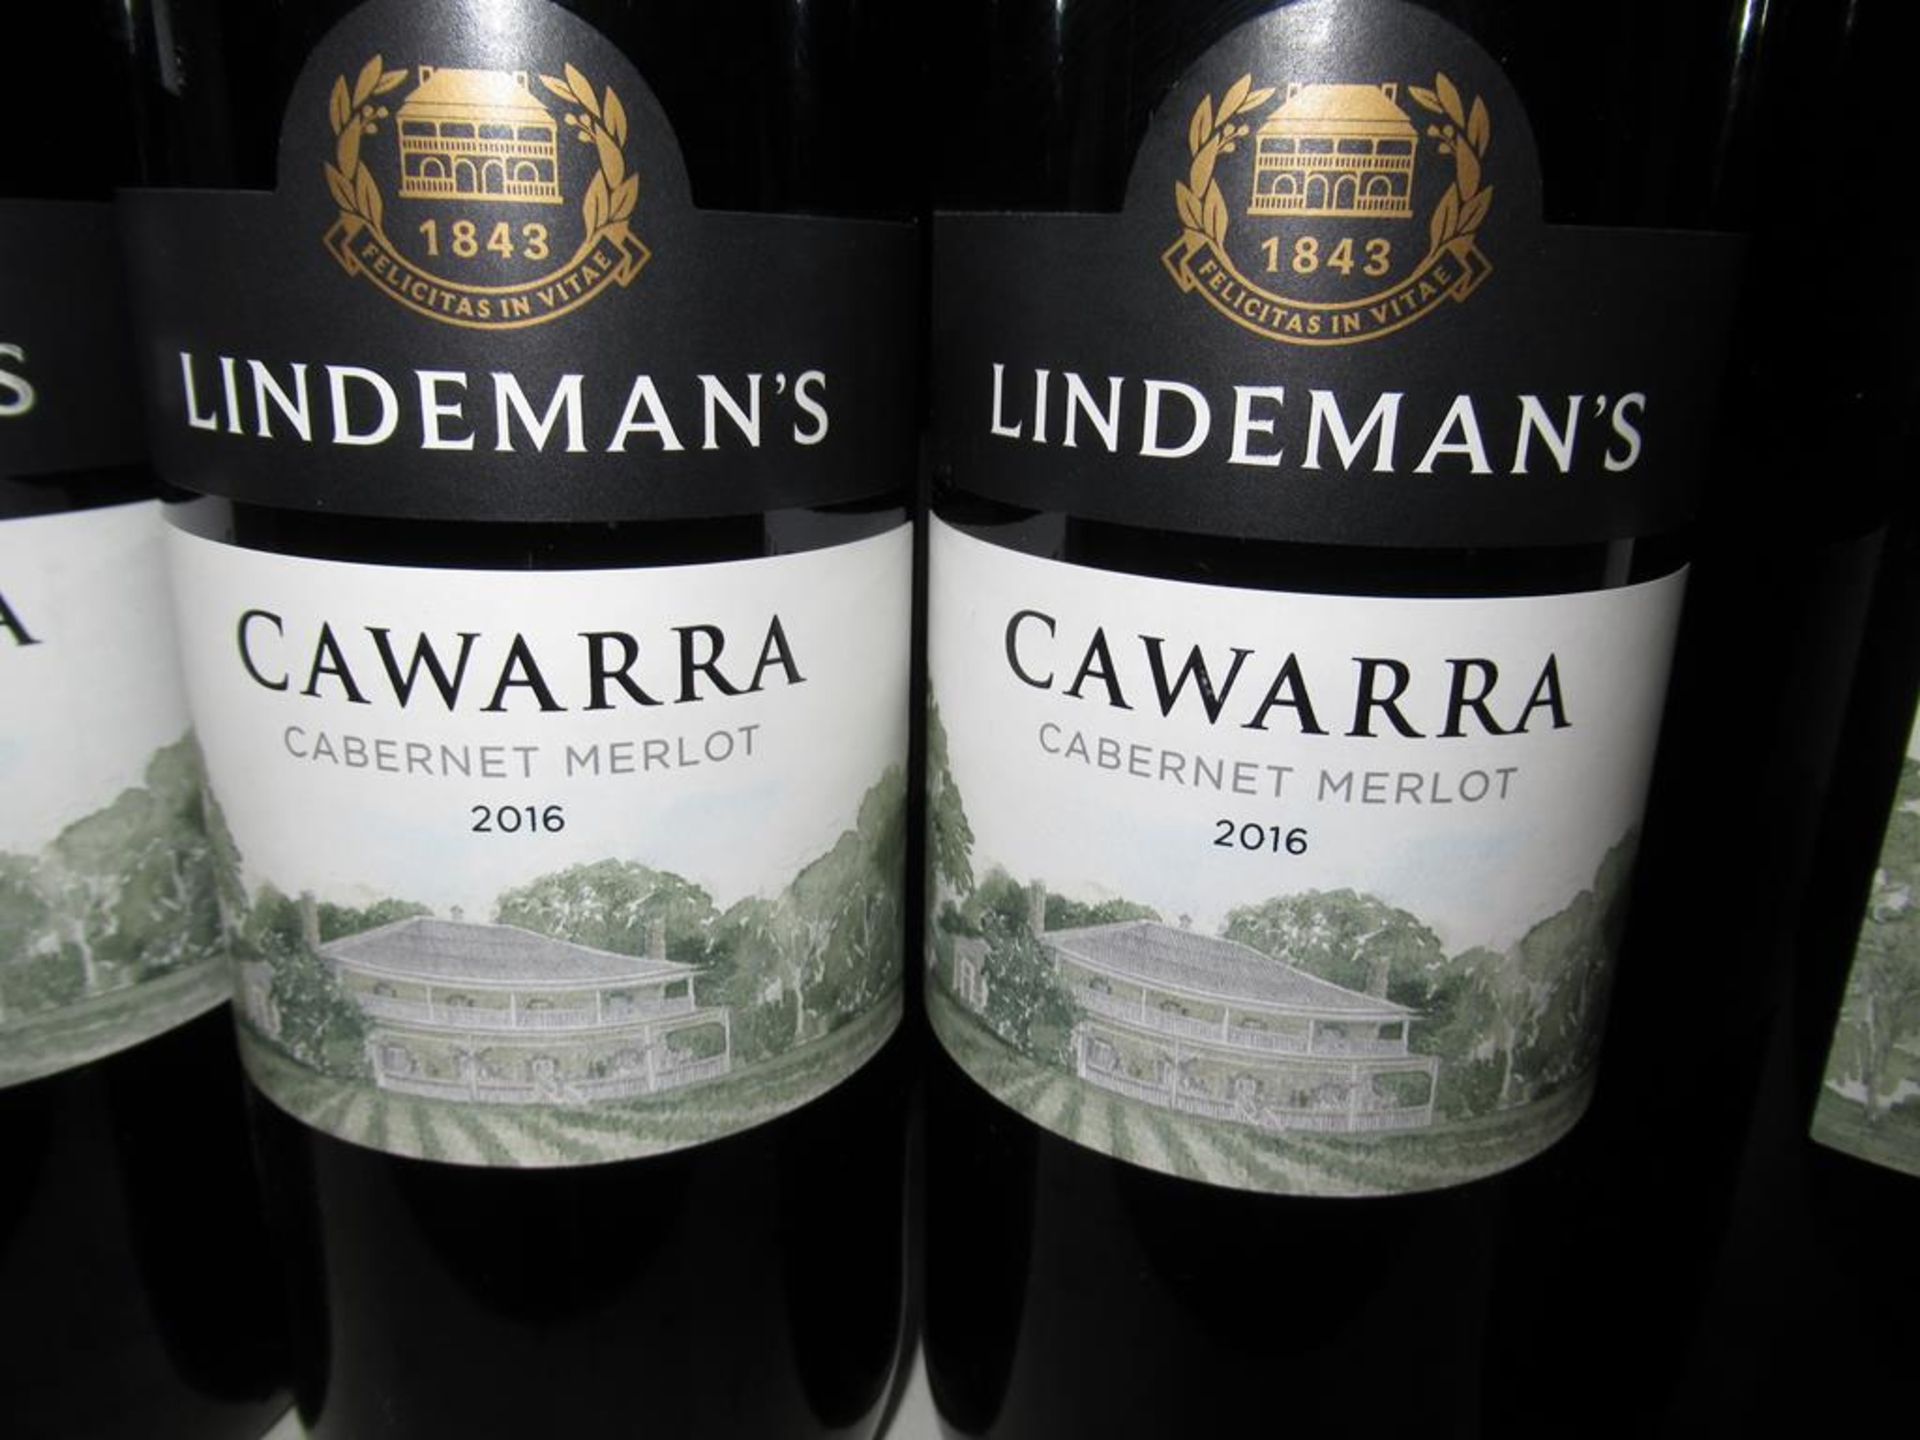 Twenty bottles of Lindeman's Cawarra Cabernet Merlot 2016 red wine - Image 2 of 3